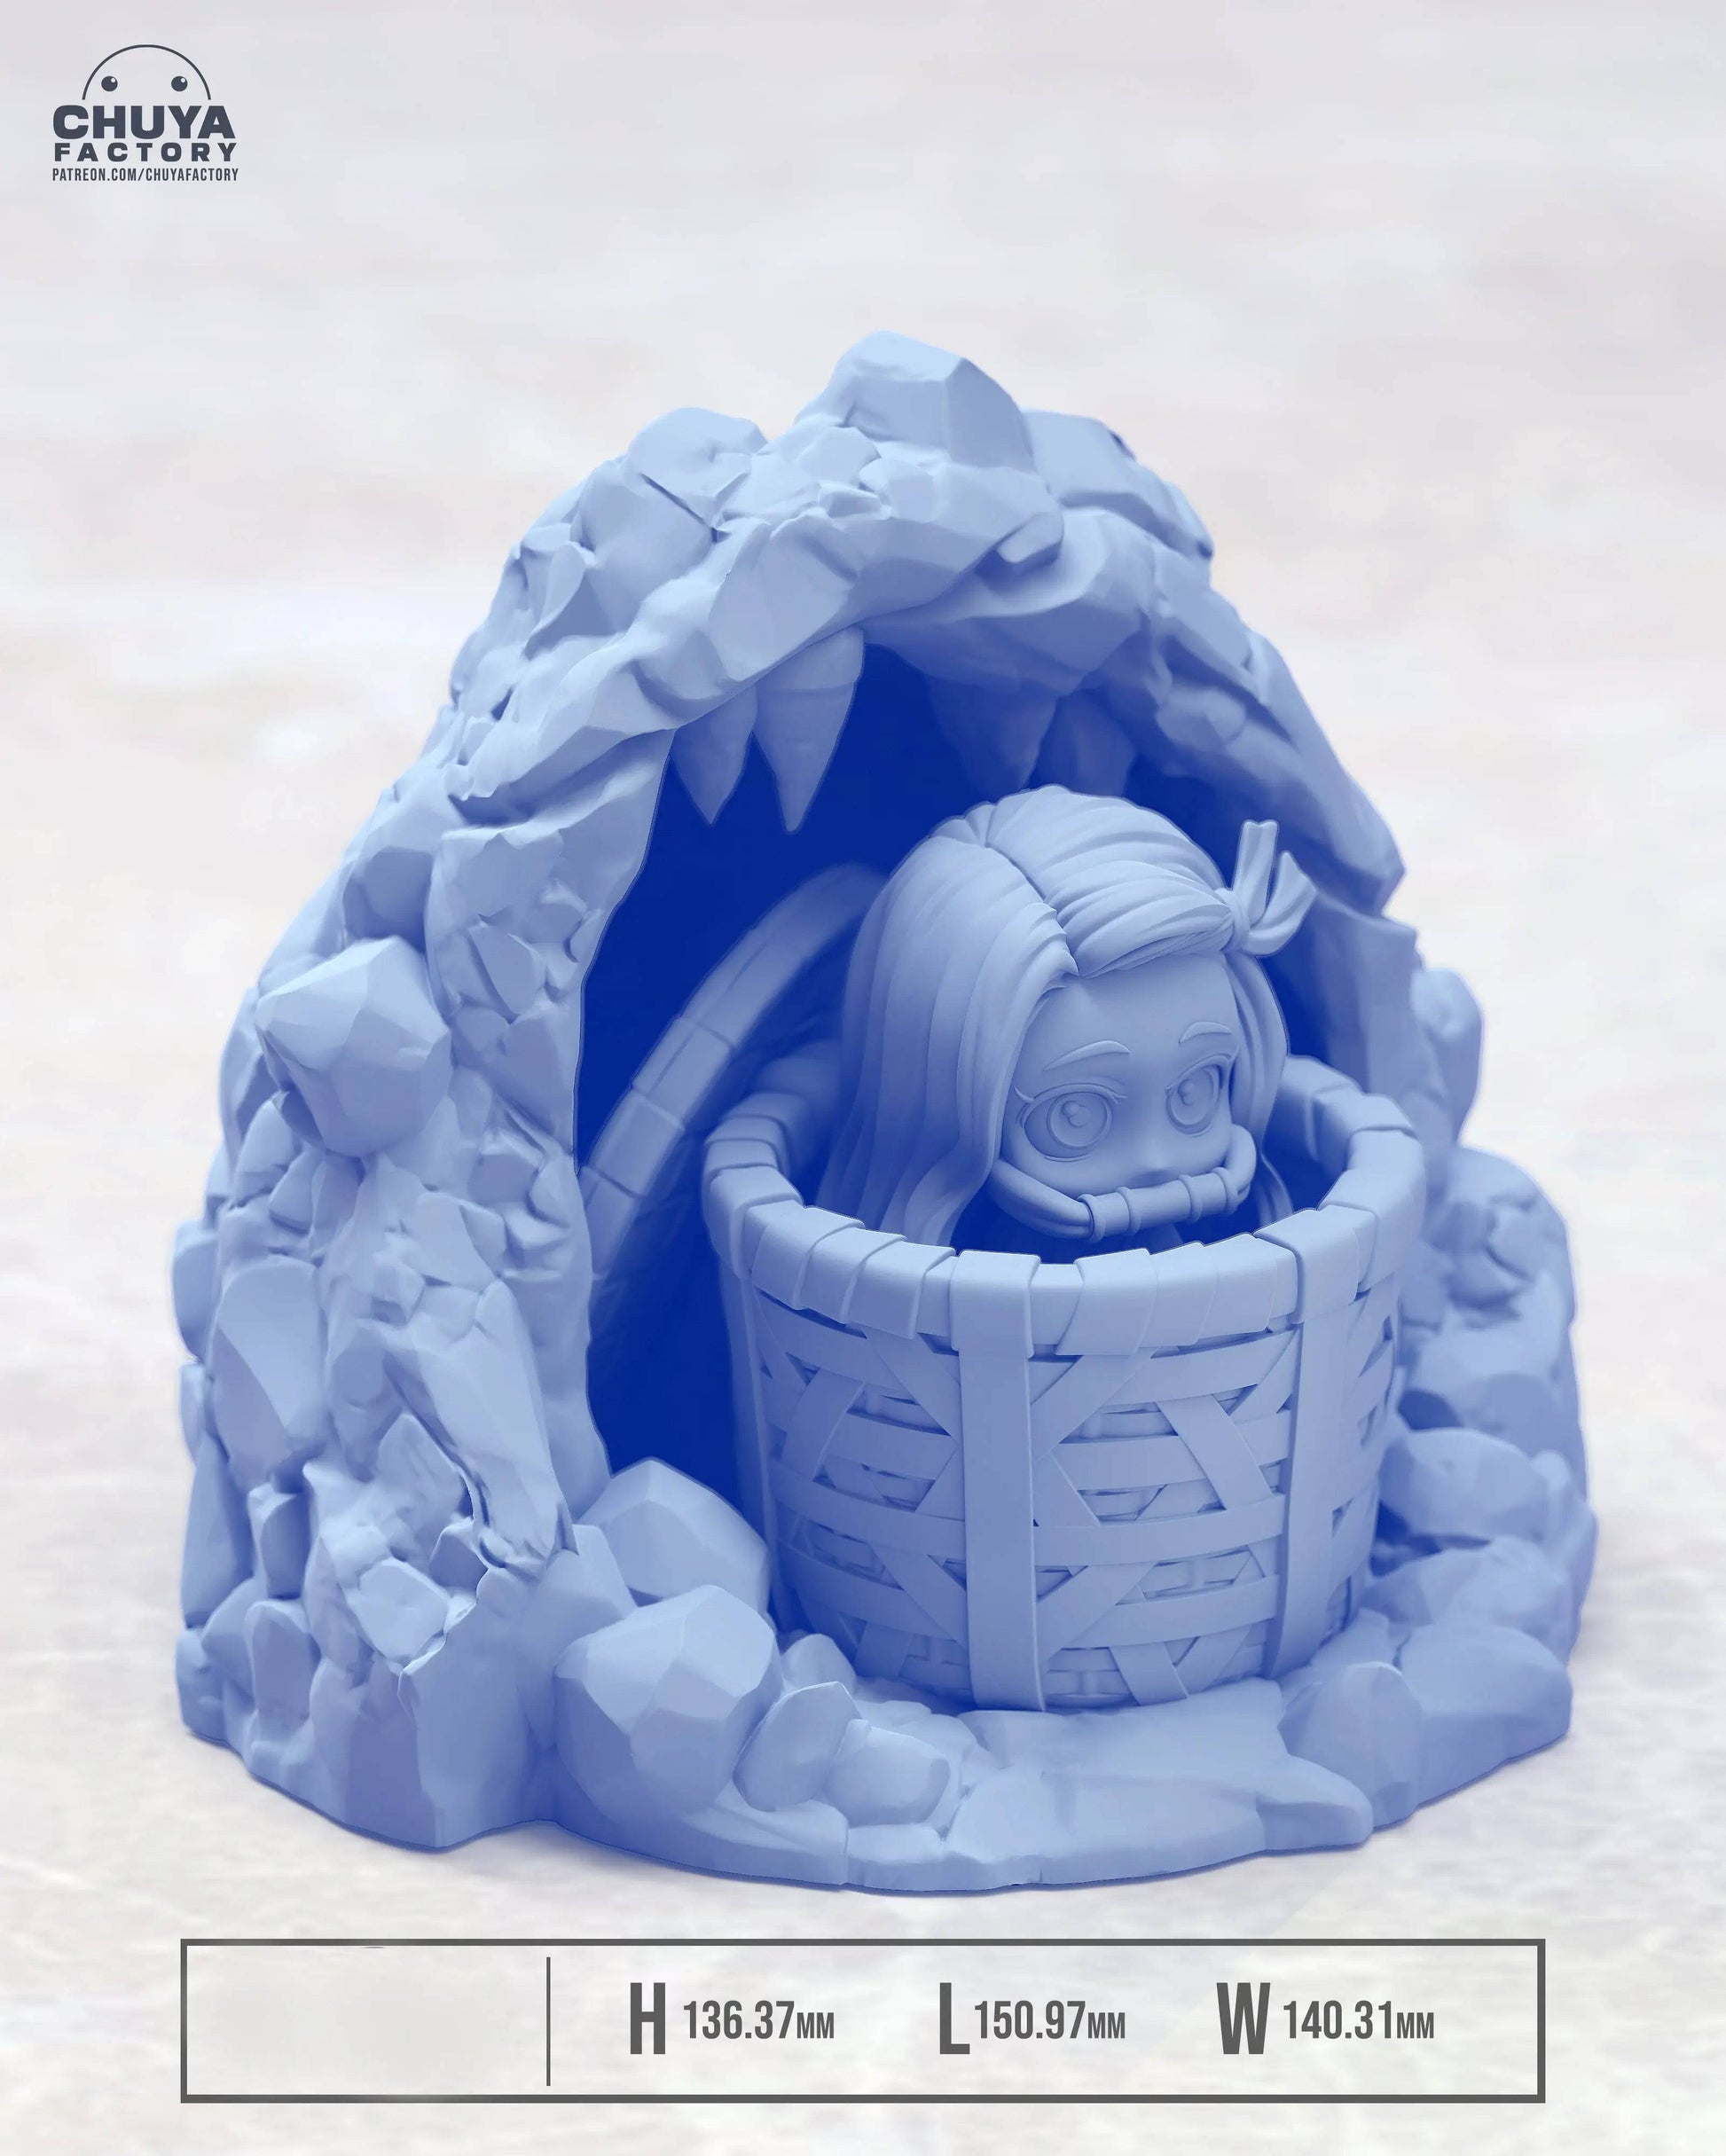 Demonic Little Sister | Resin Garage Kit Sculpture Anime Video Game Fan Art Statue | Chuya Factory - Tattles Told 3D